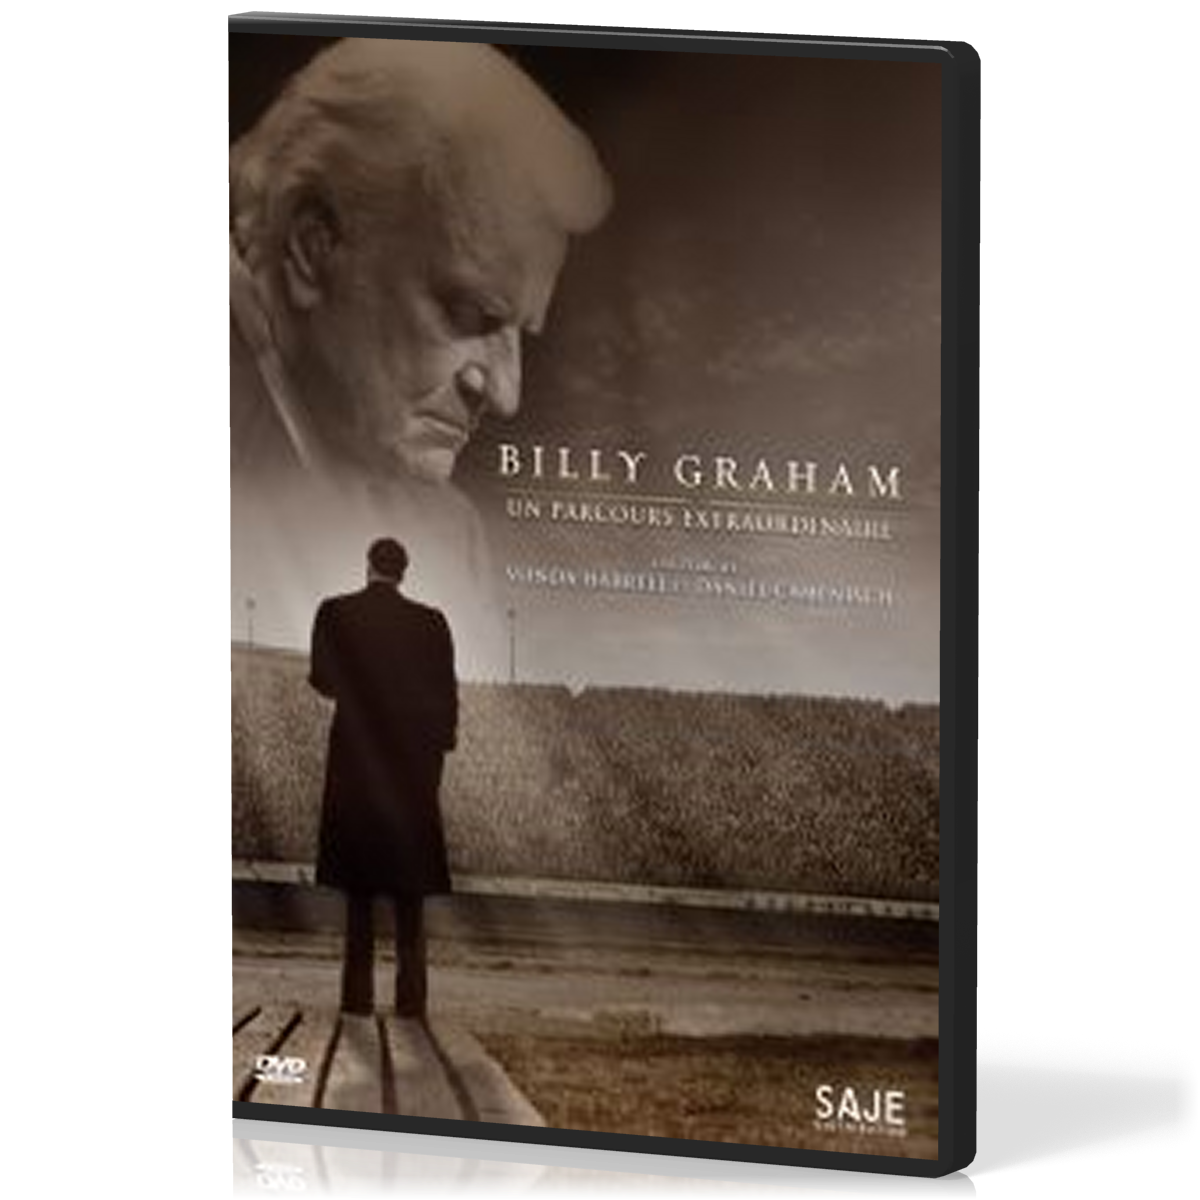 BILLY GRAHAM UN PARCOURS EXTRAORDINAIRE DVD